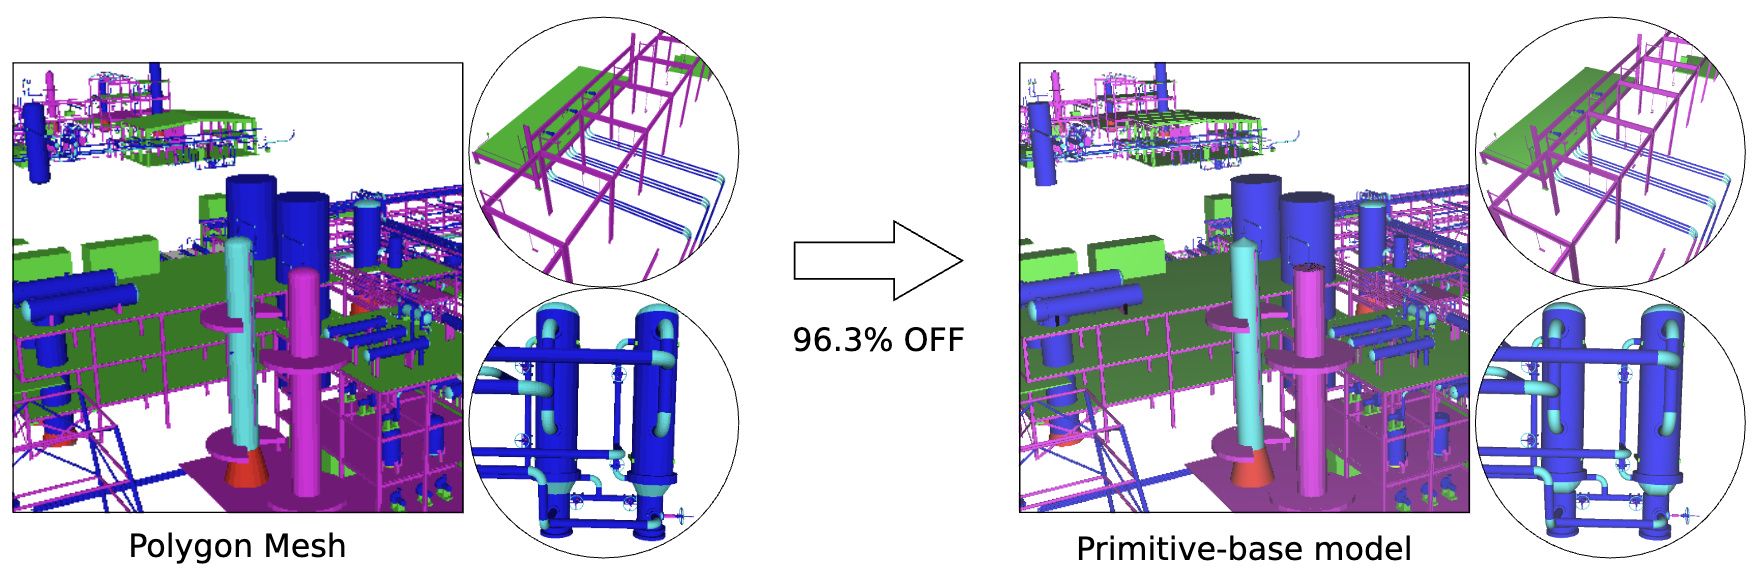 Primitive-based Model Reduction for Huge 3D Meshes of Industrial Plants